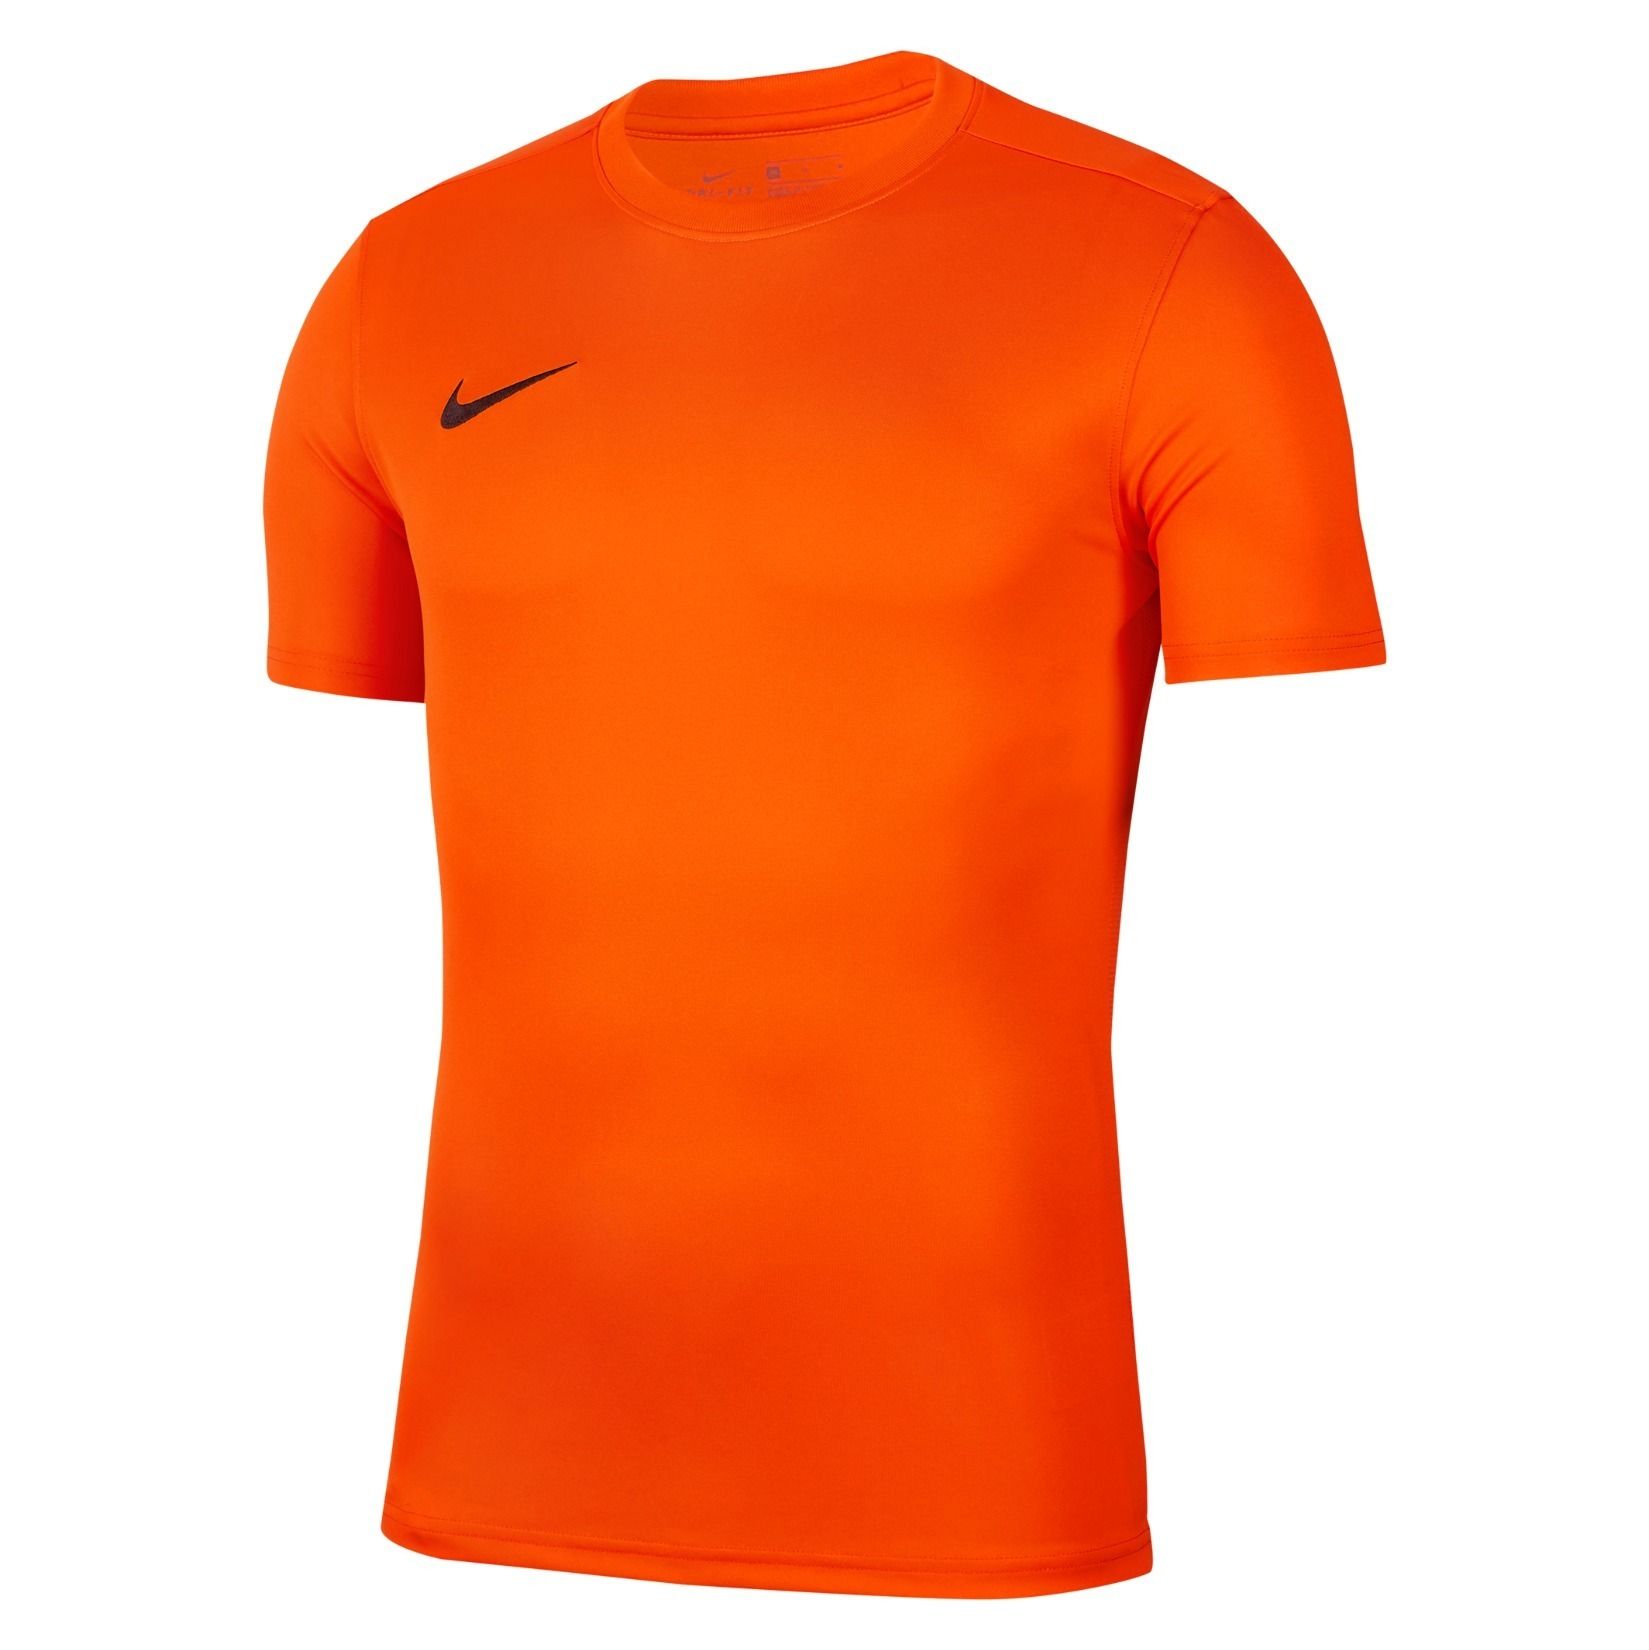 Nike Park VII Dri-FIT Short Sleeve Shirt: Name/Number - Kitlocker.com